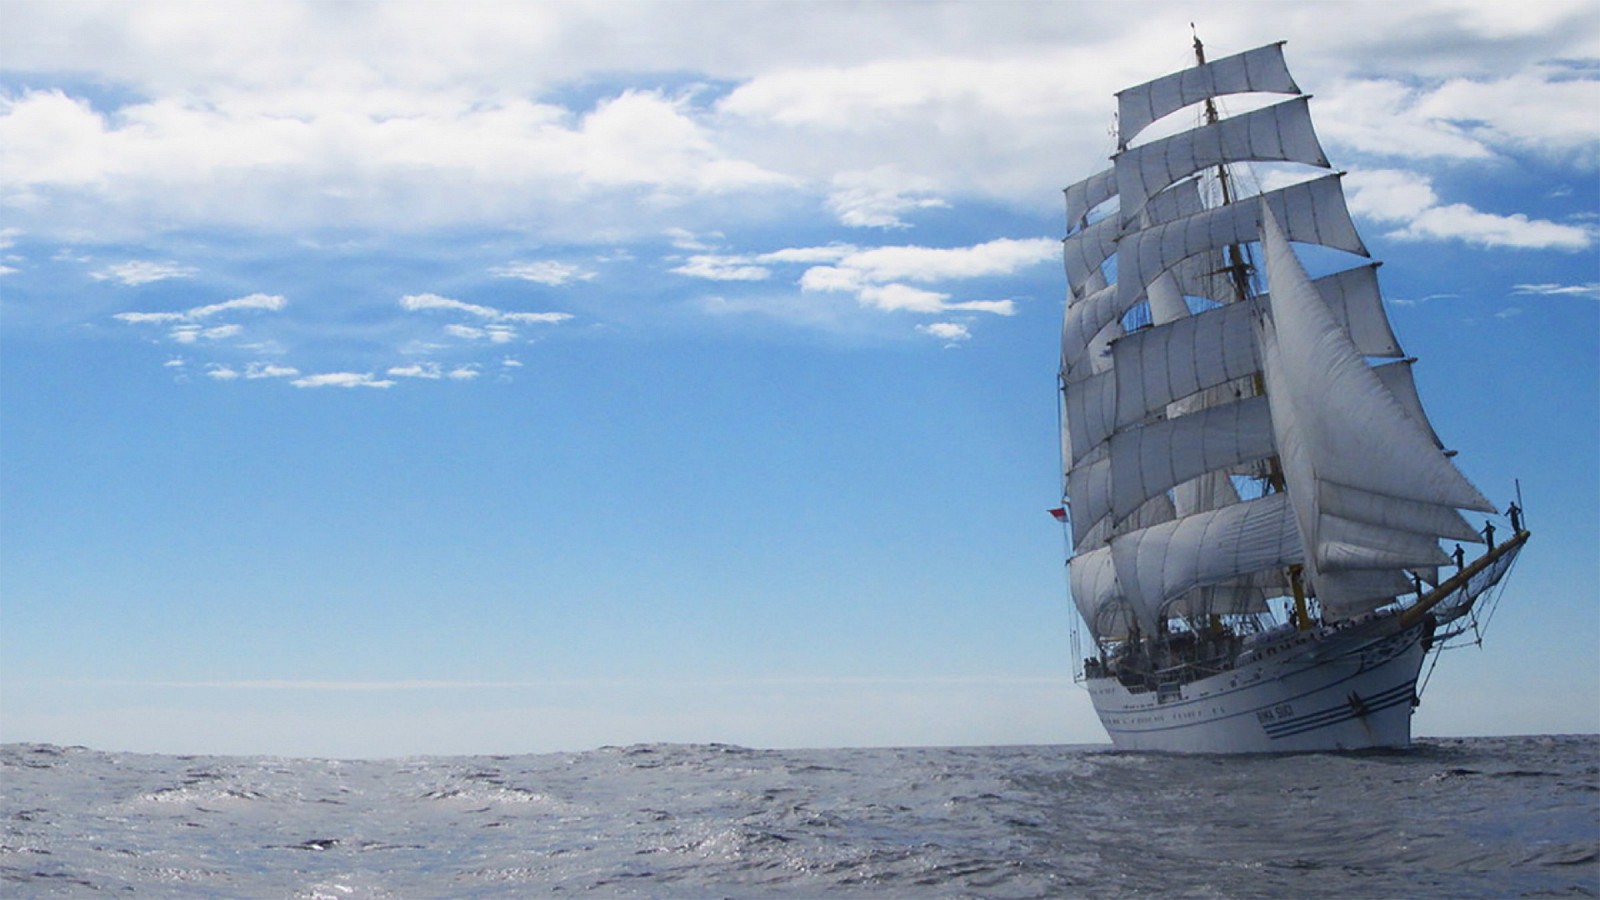 93m sail training vessel 'Bima Suci'